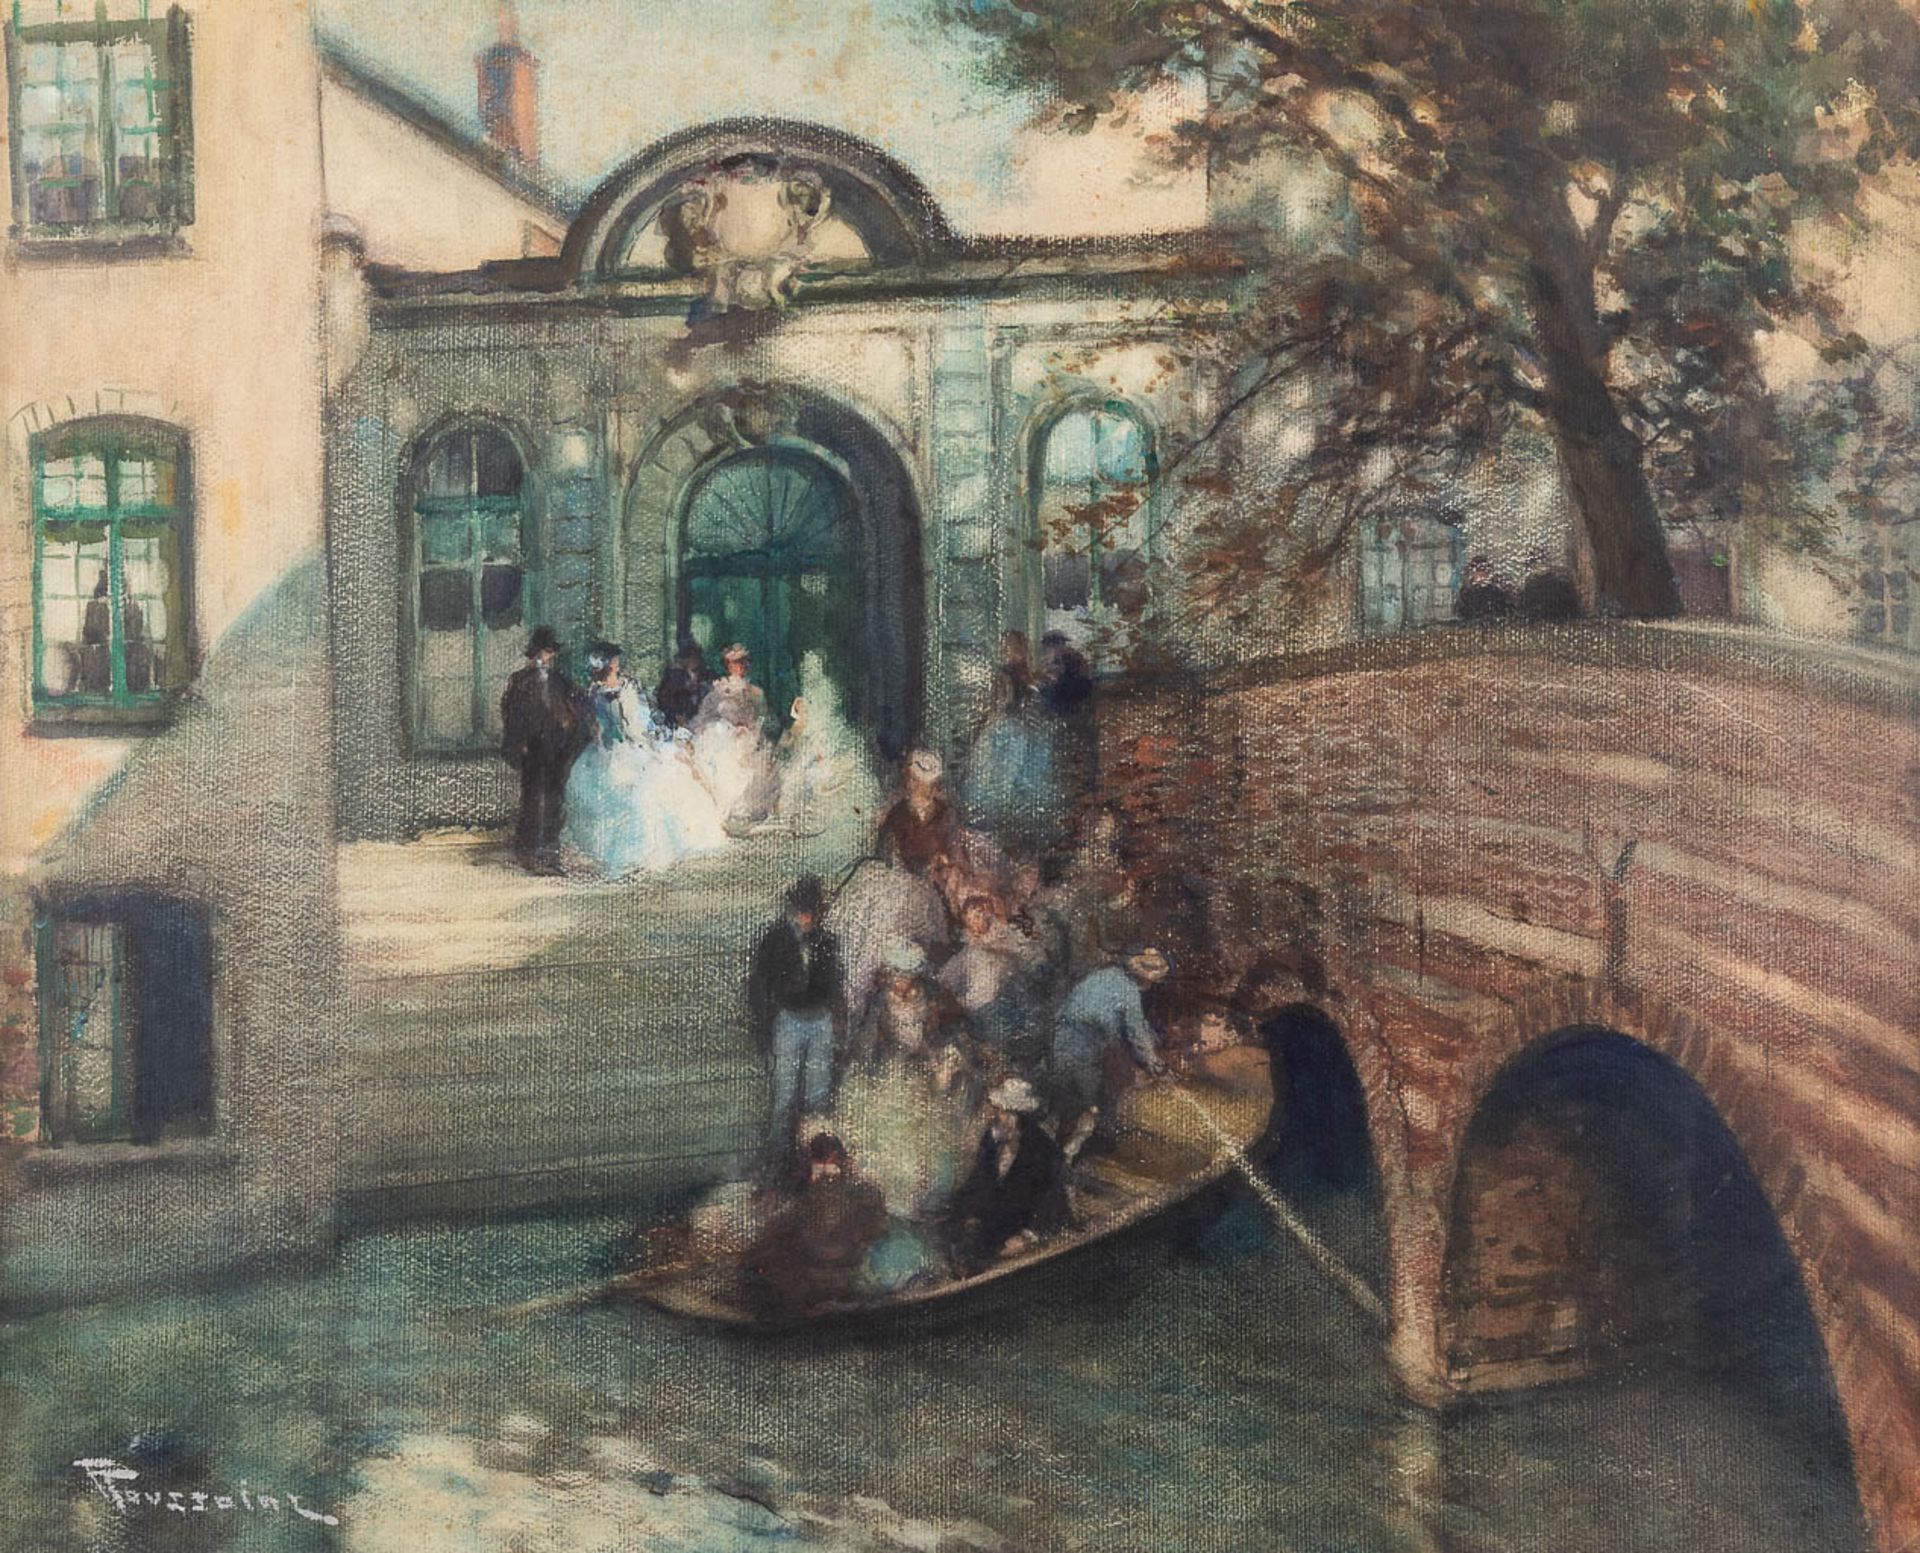 Fernand TOUSSAINT (1873-1955/56) 'Wedding boatride' mixed media on board. (W: 80 x H: 65 cm)